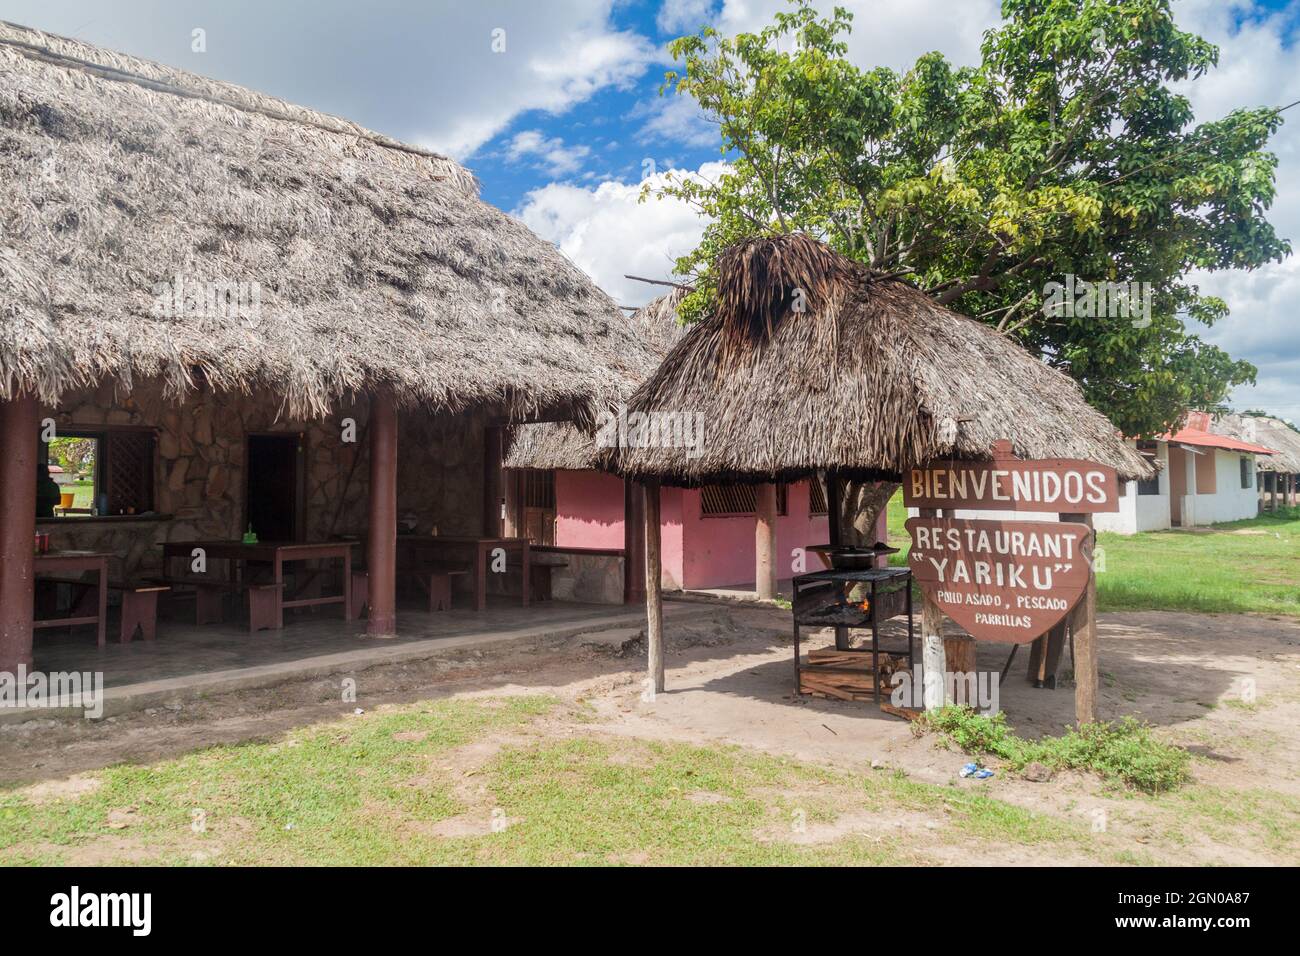 GRAN SABANA, VENEZUELA - AUGUST 13, 2015: Rural restaurant in an indigenous village in Gran Sabana region of Venezuela Stock Photo